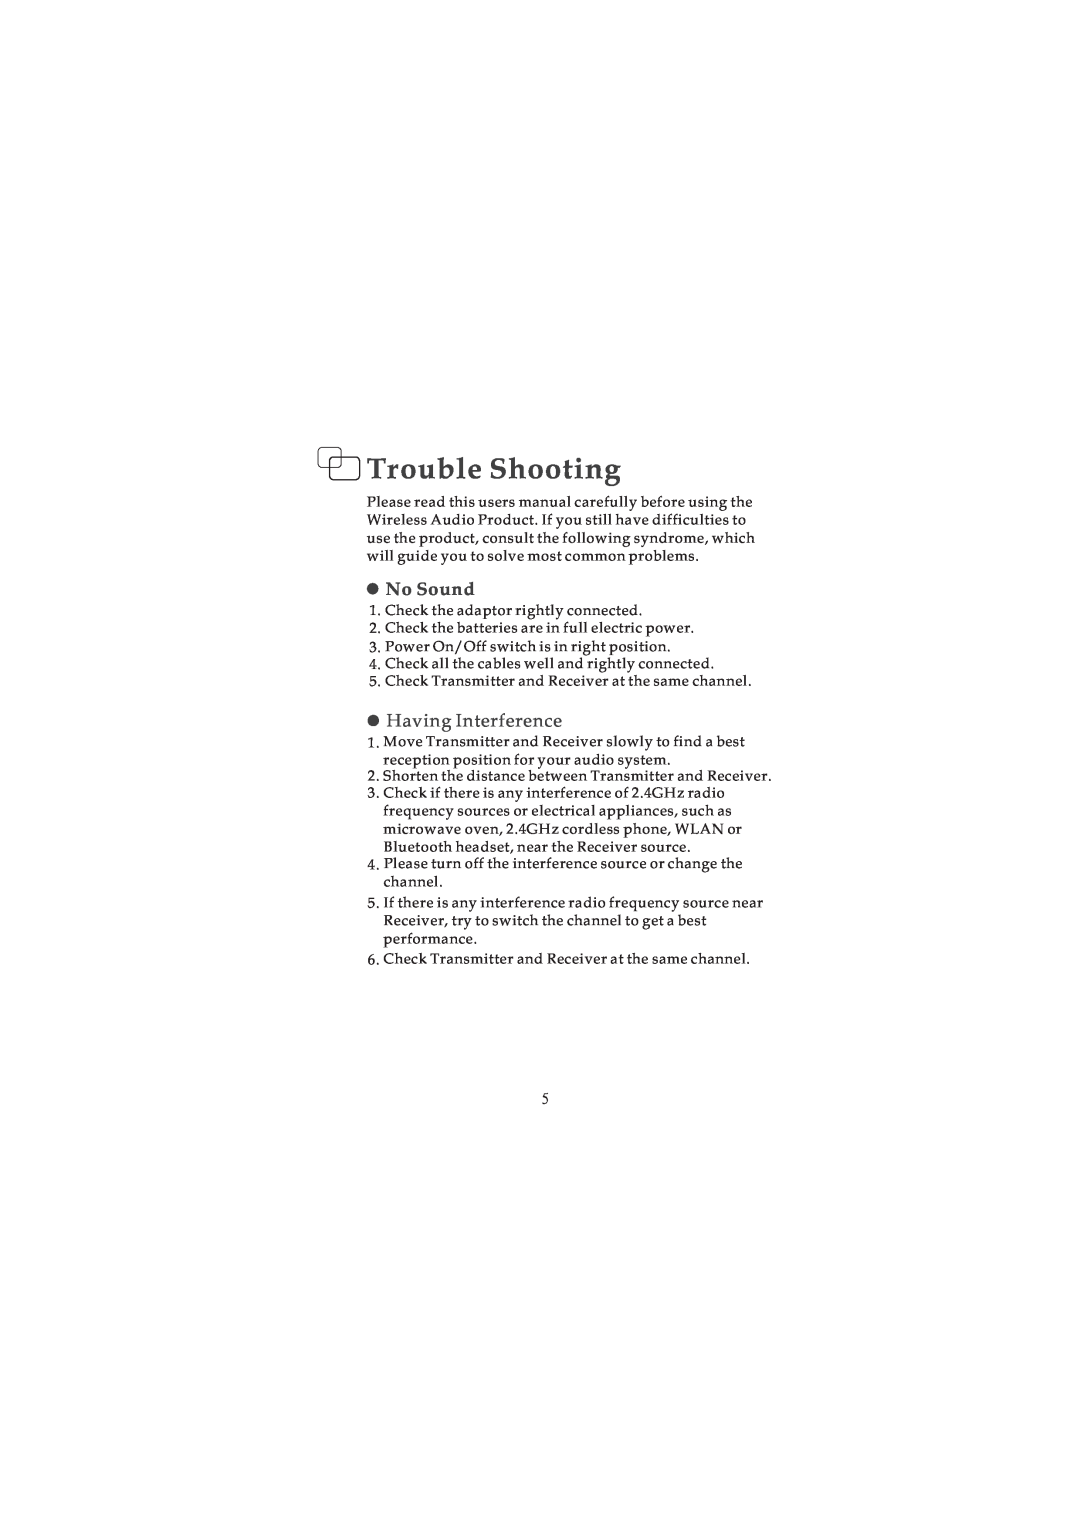 ELANsat Tech Wireless Digital Audio manual Trouble Shooting, No Sound, Having Interference 